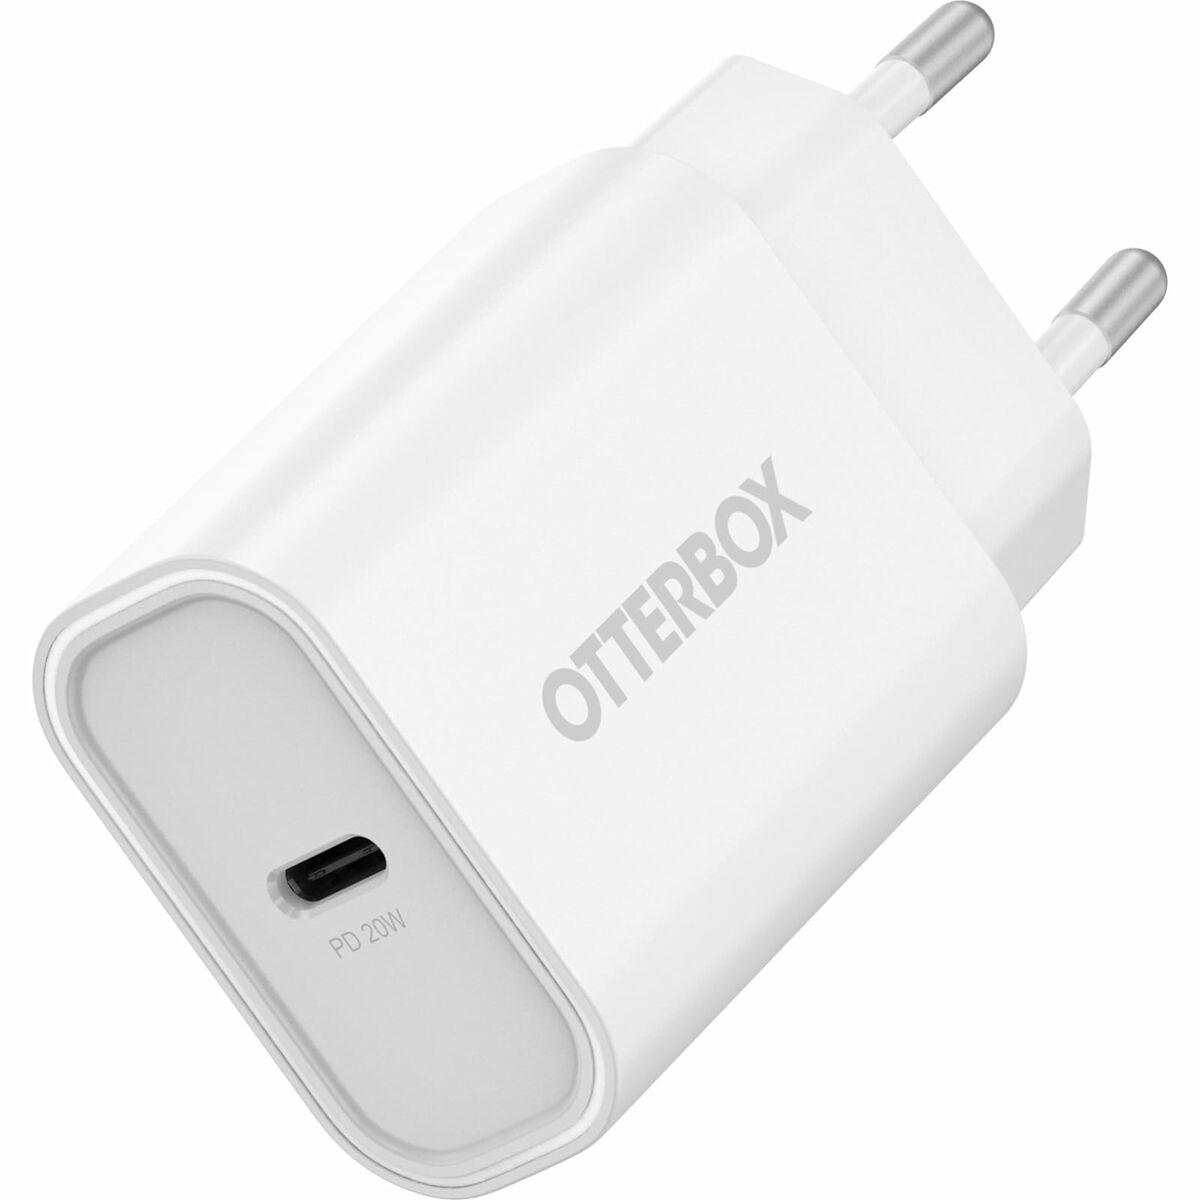 Caricatore portatile Otterbox LifeProof 840304749621 Bianco